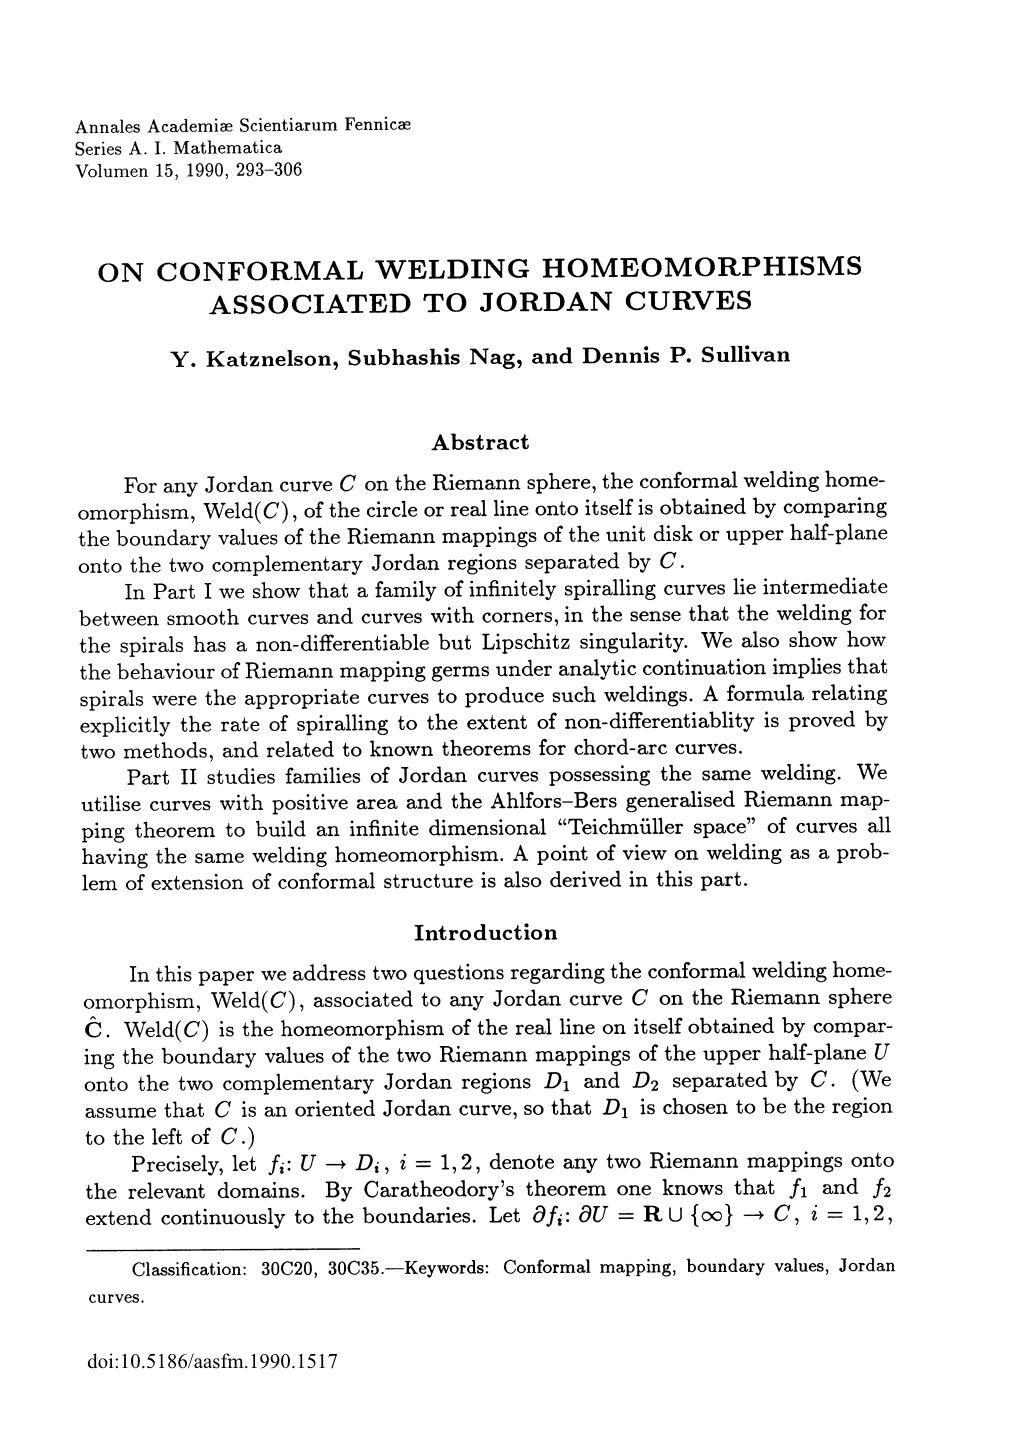 On Conformal Welding Homeomorphisms Associated to Jordan Curves